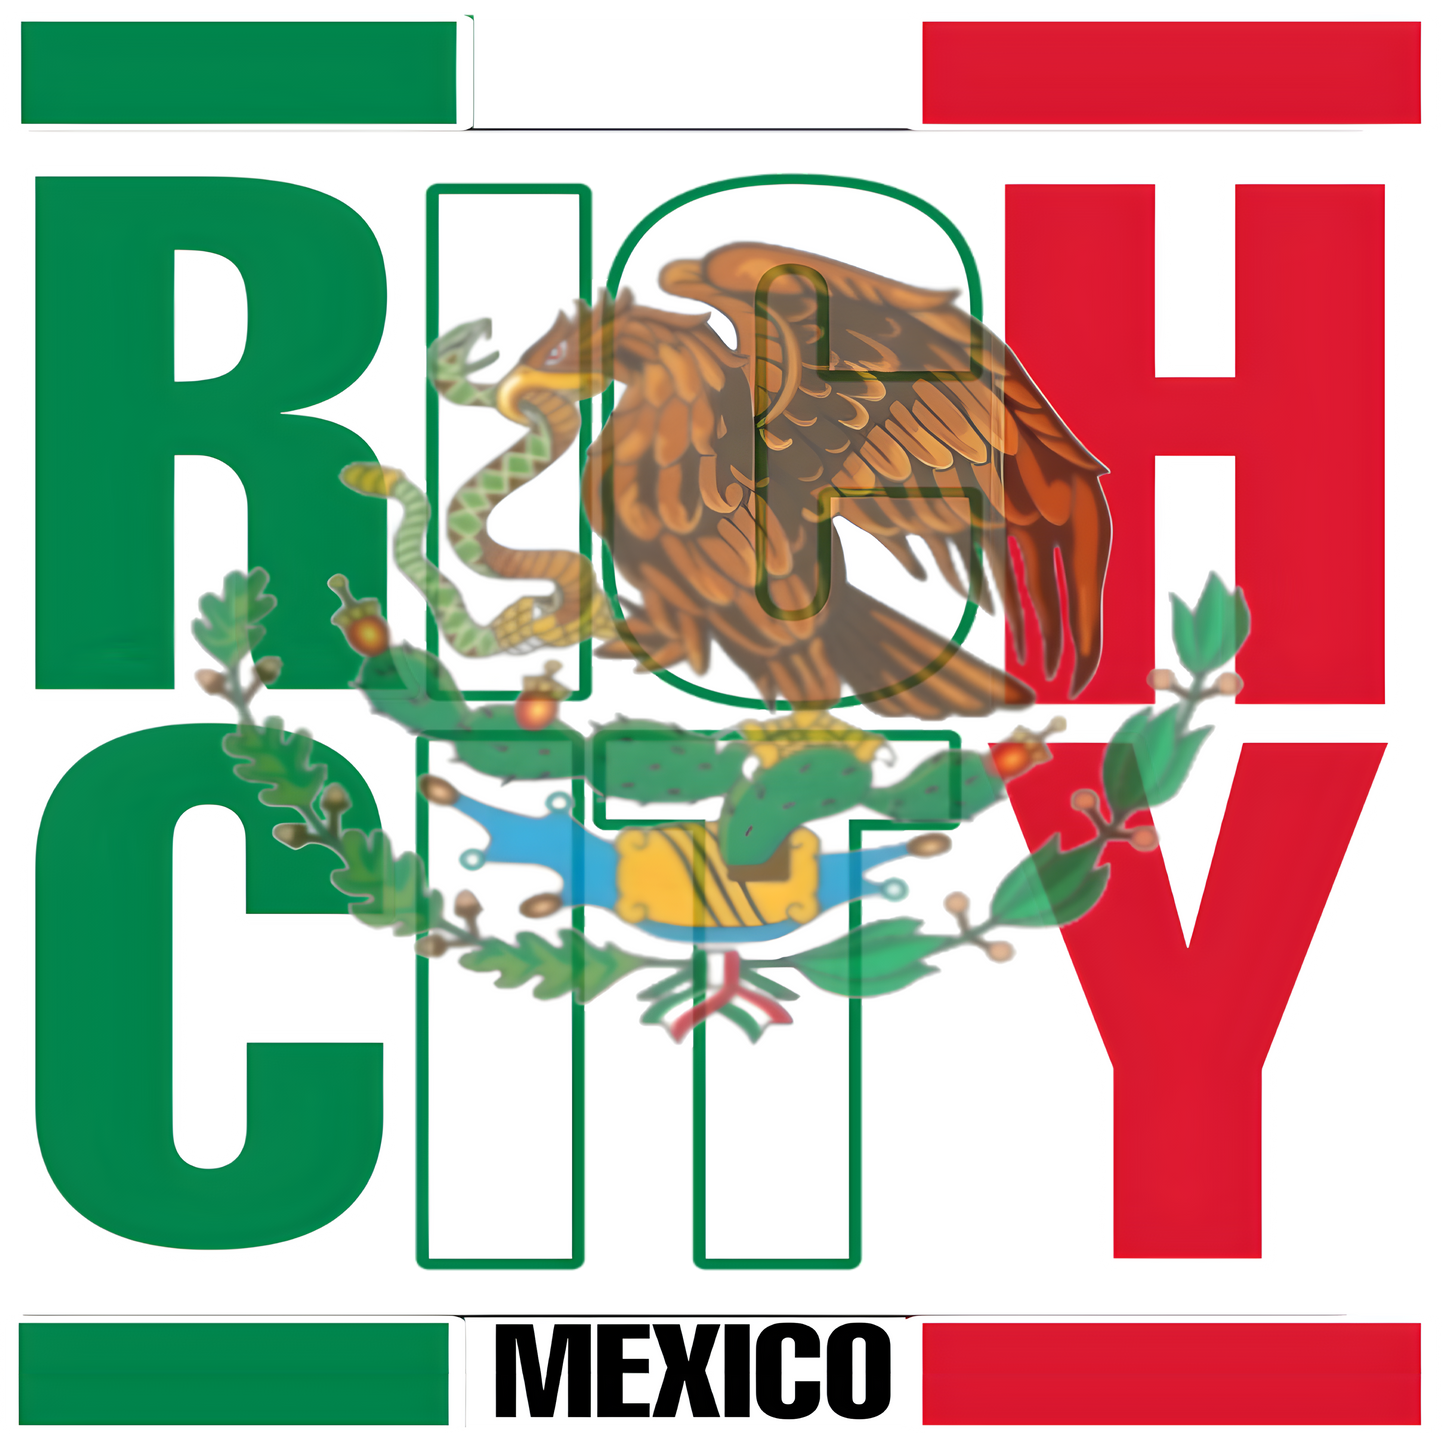 New Raffle RichCity "Mexico" T-Shirt